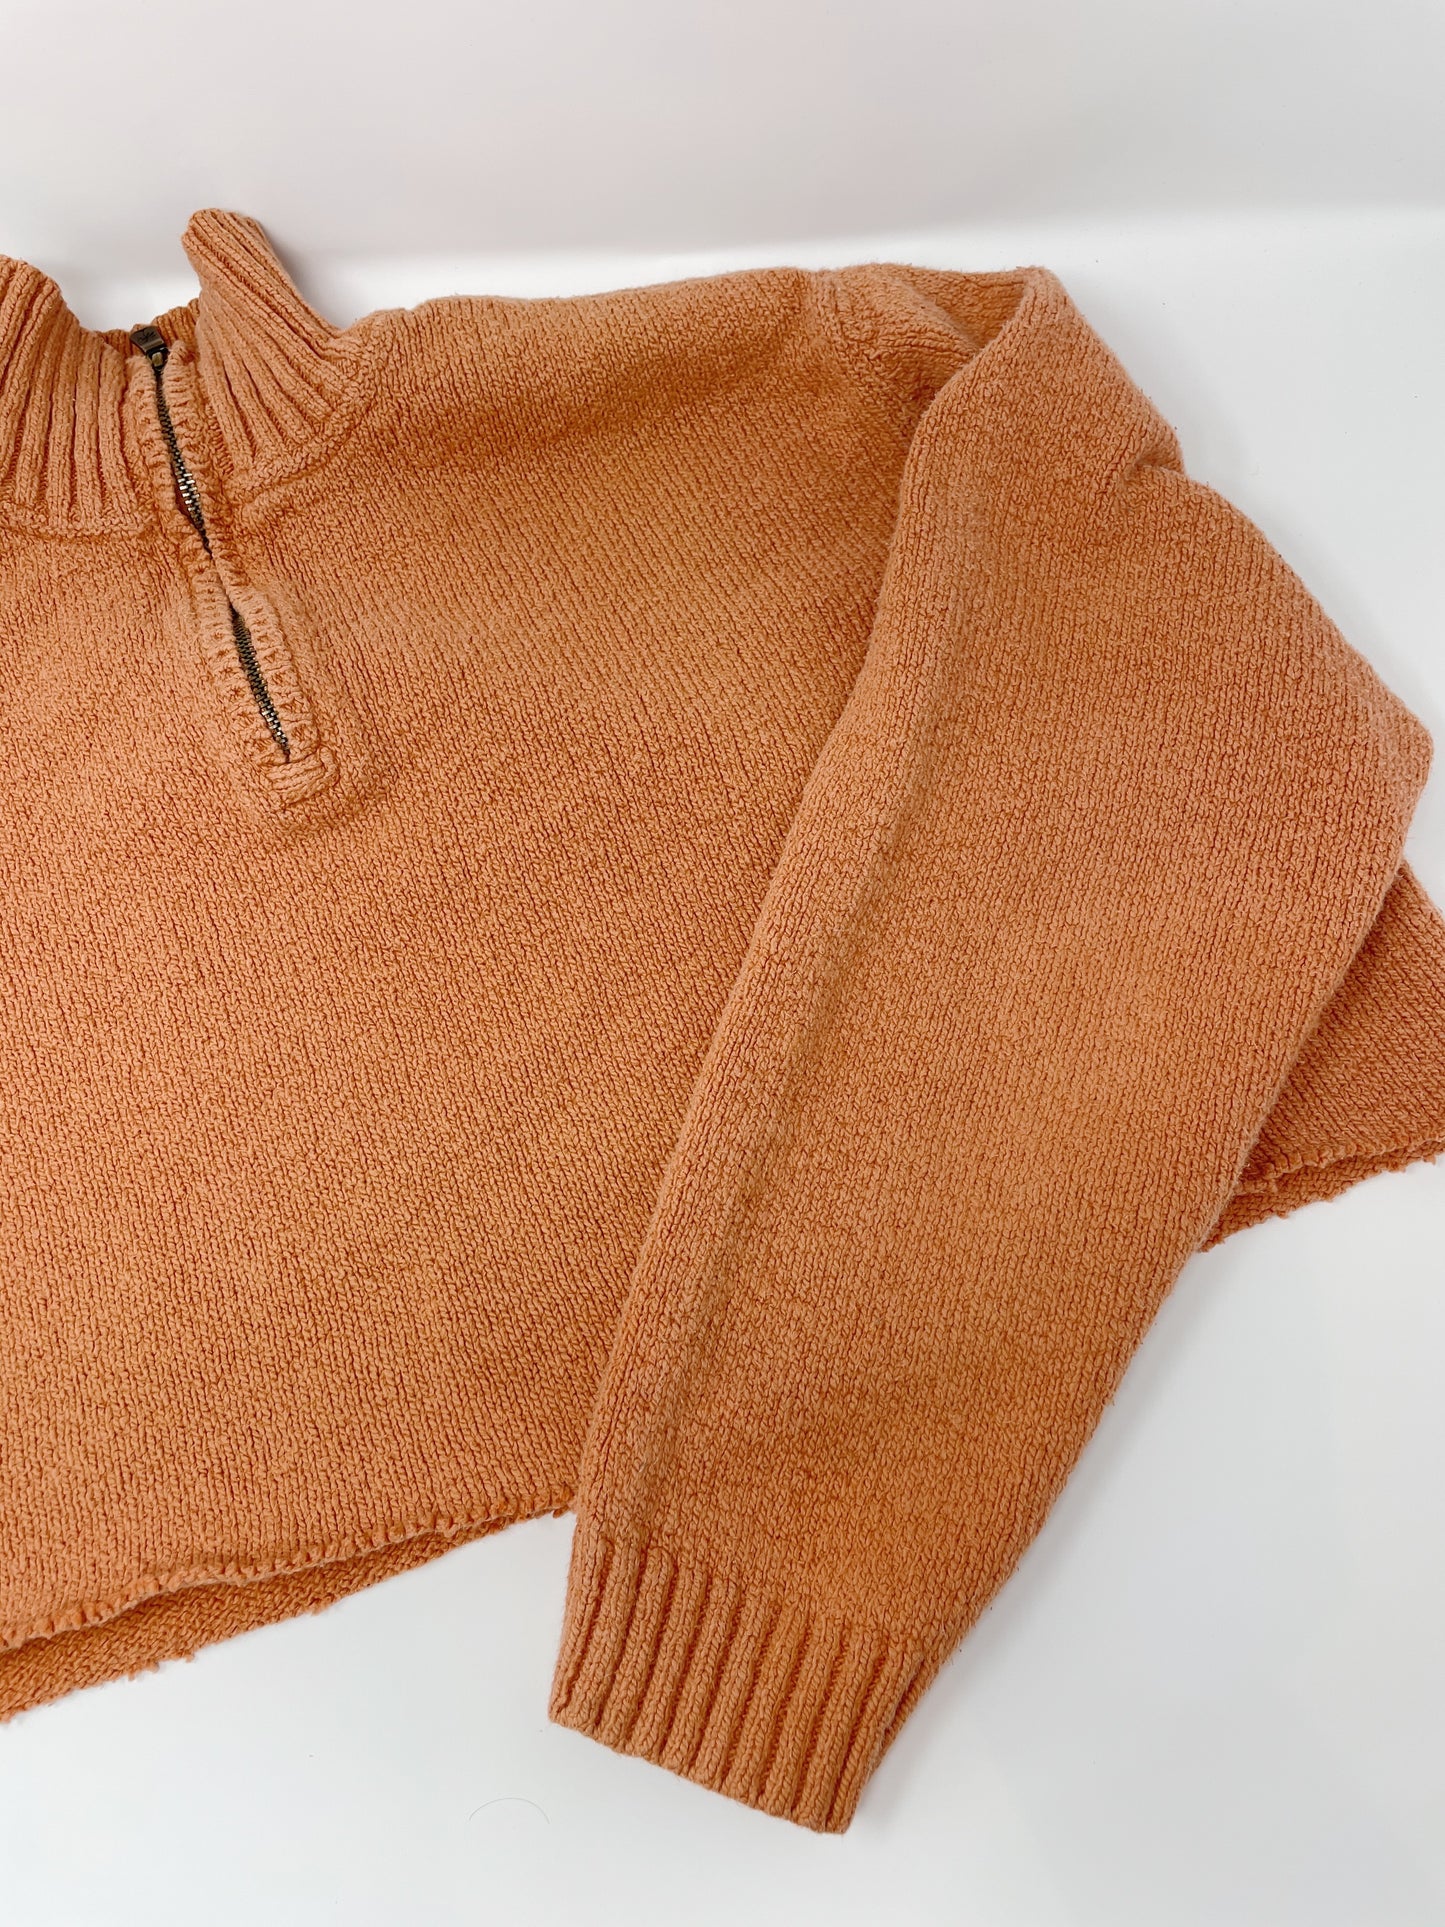 The Orange Towel Sweater